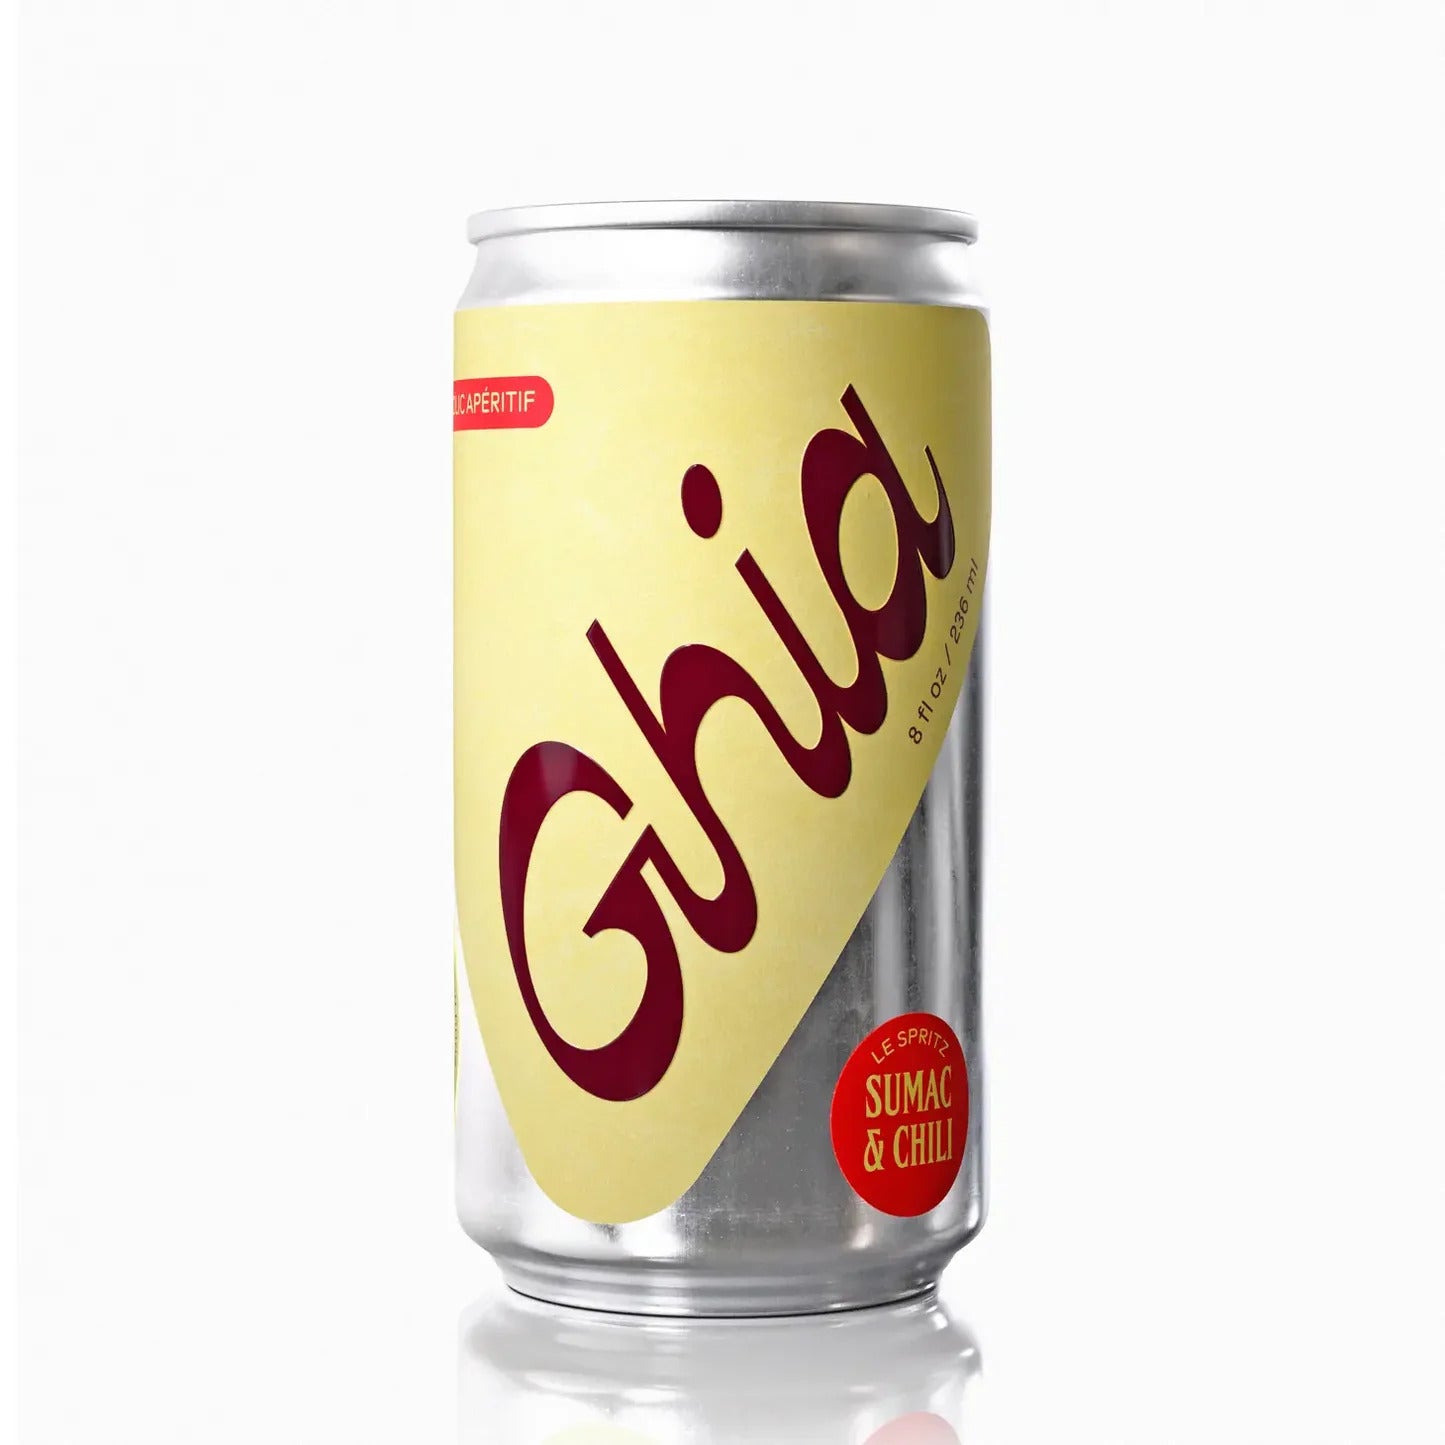 Ghia - Chili + Sumac Spritz